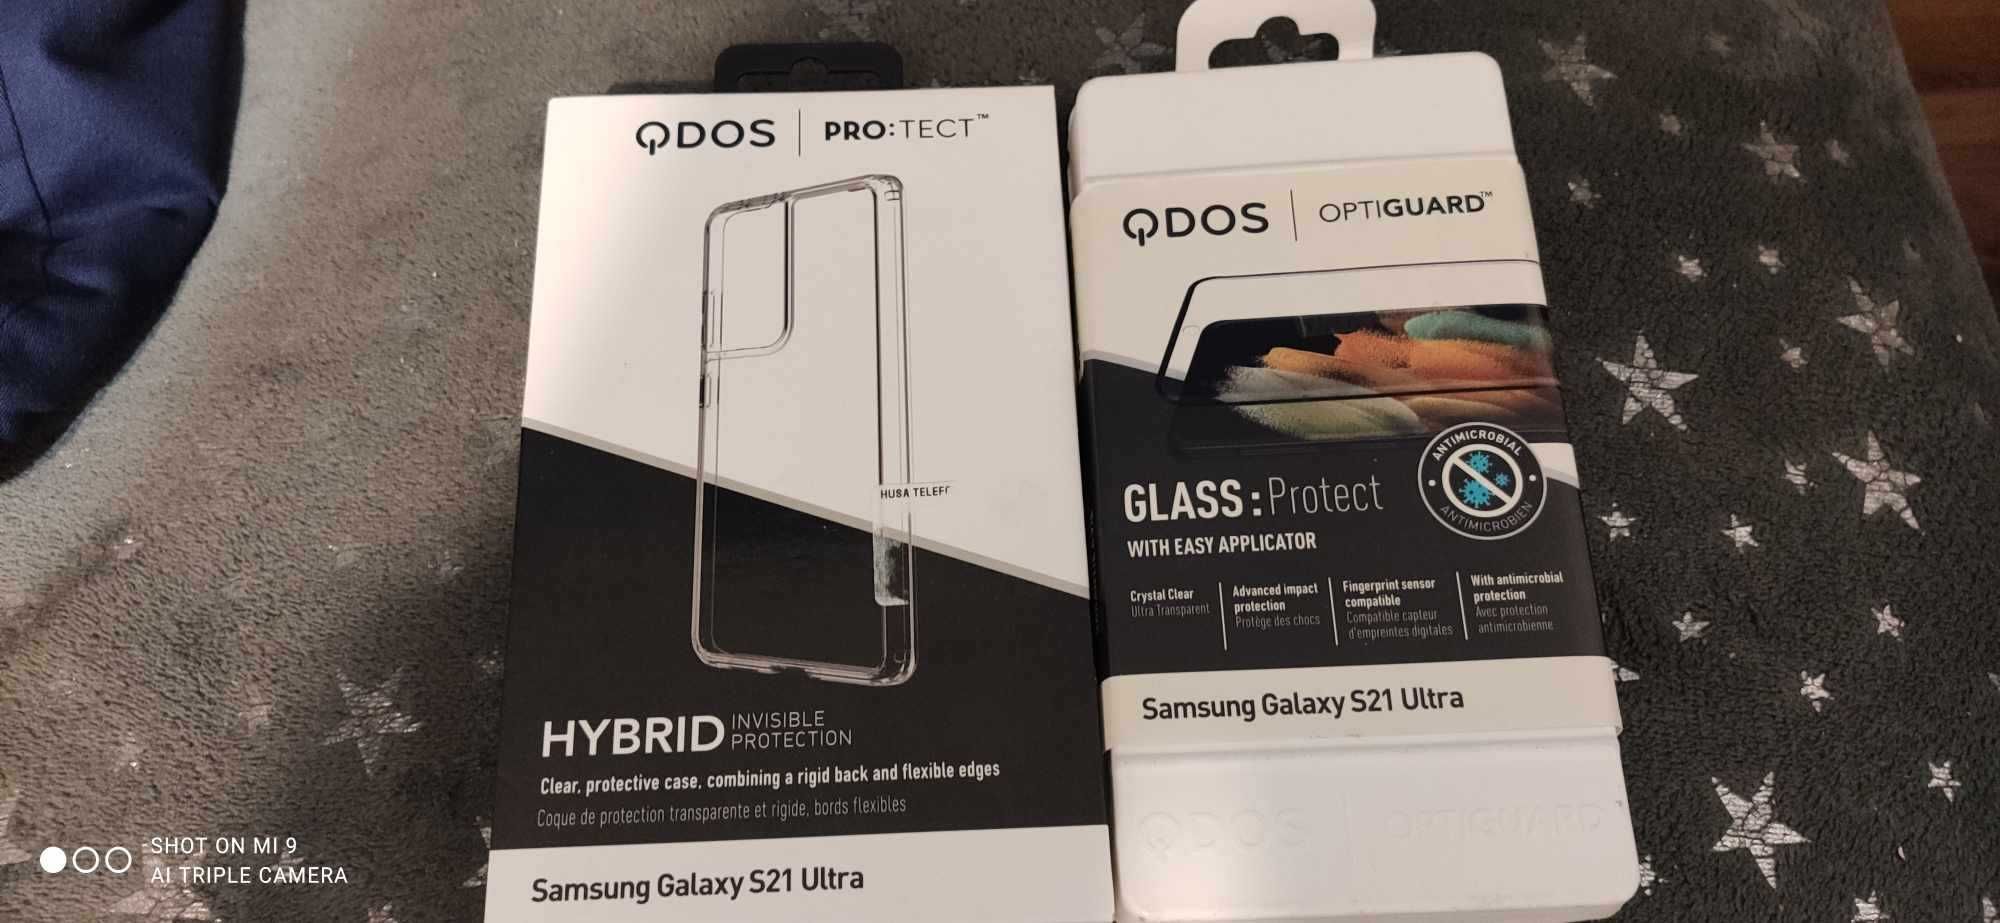 Kit folie de sticla + husa plastic QDOS, Samsung Galaxy S21 Ultra